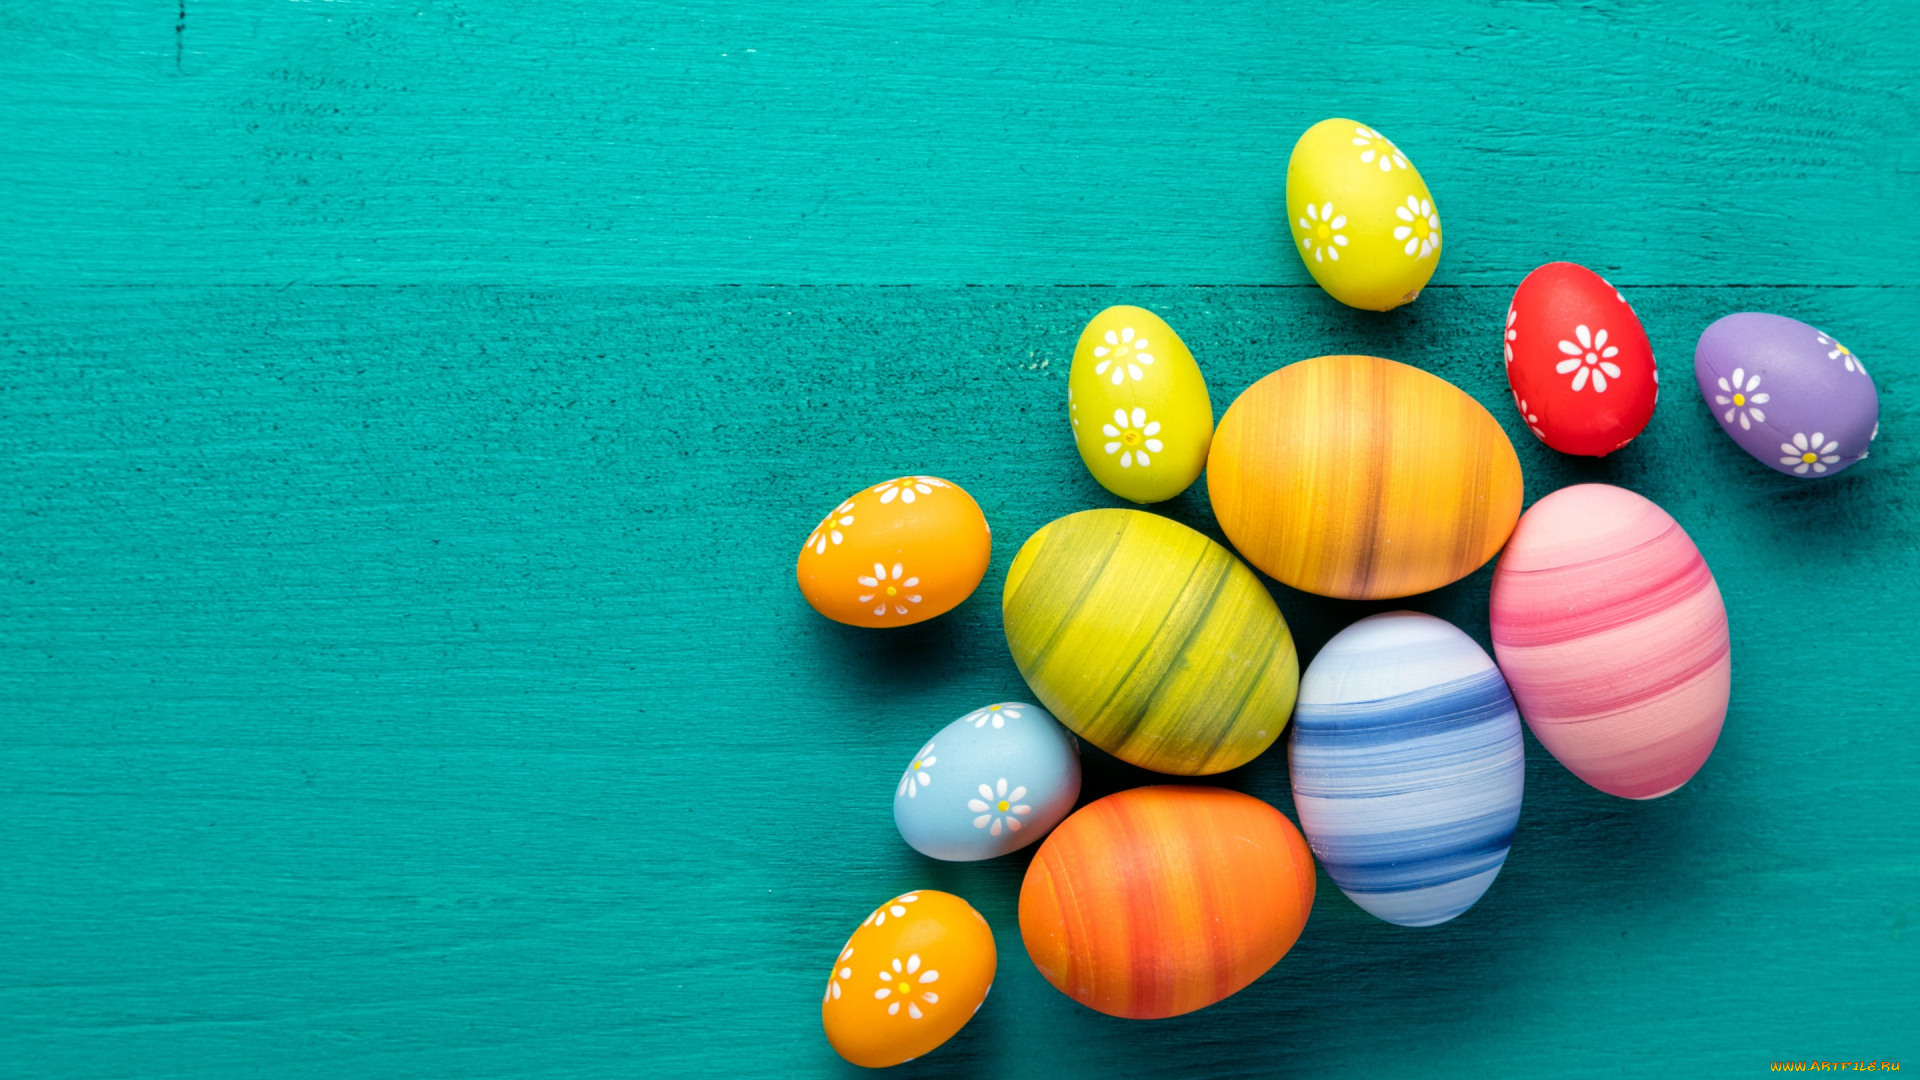 праздничные, пасха, весна, decoration, colorful, wood, easter, яйца, крашеные, eggs, spring, happy